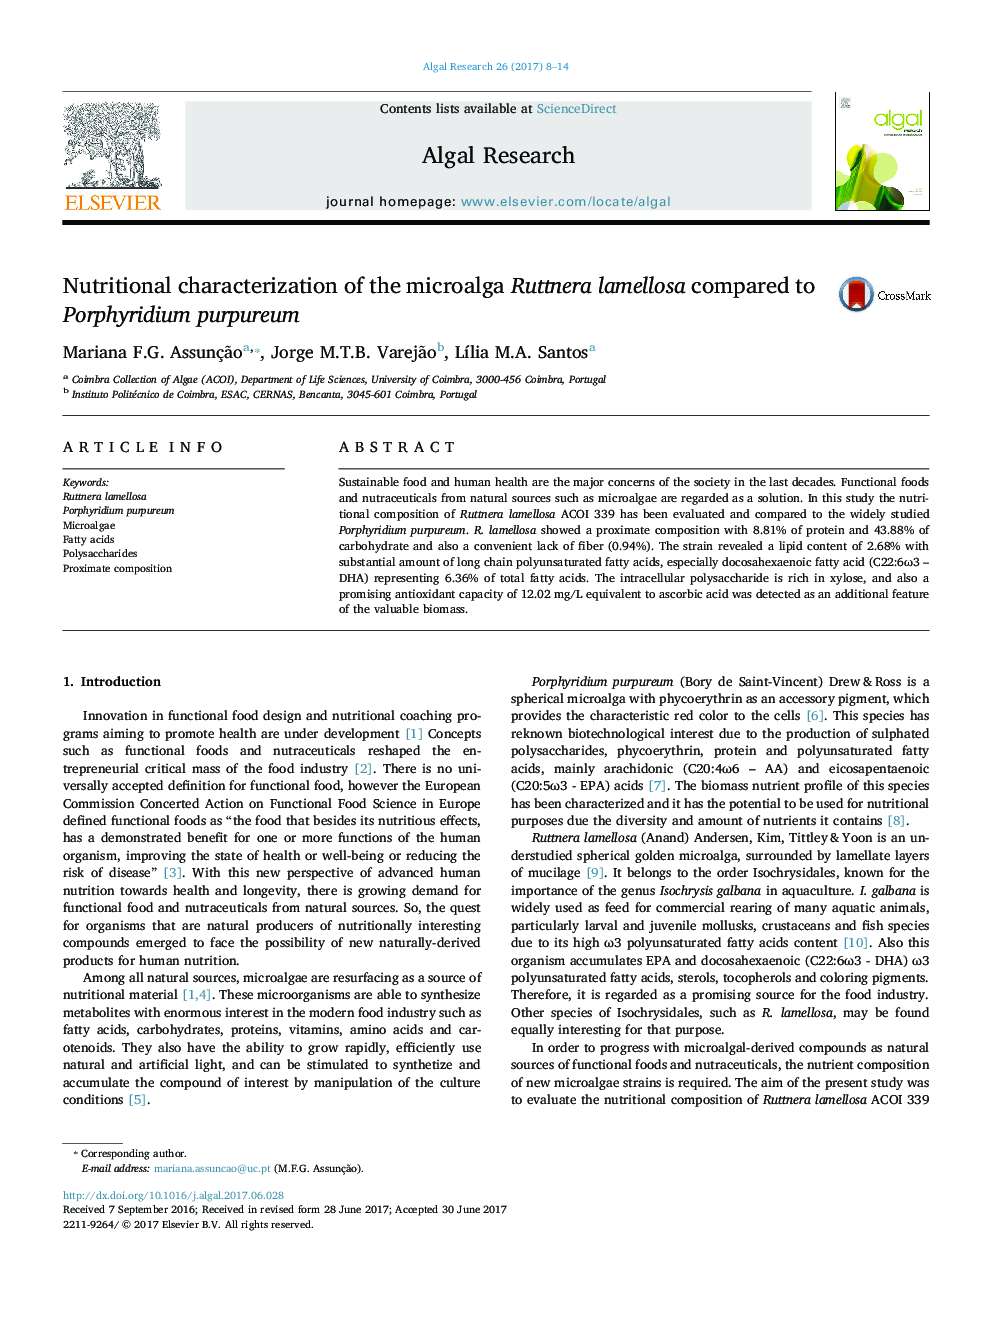 Nutritional characterization of the microalga Ruttnera lamellosa compared to Porphyridium purpureum